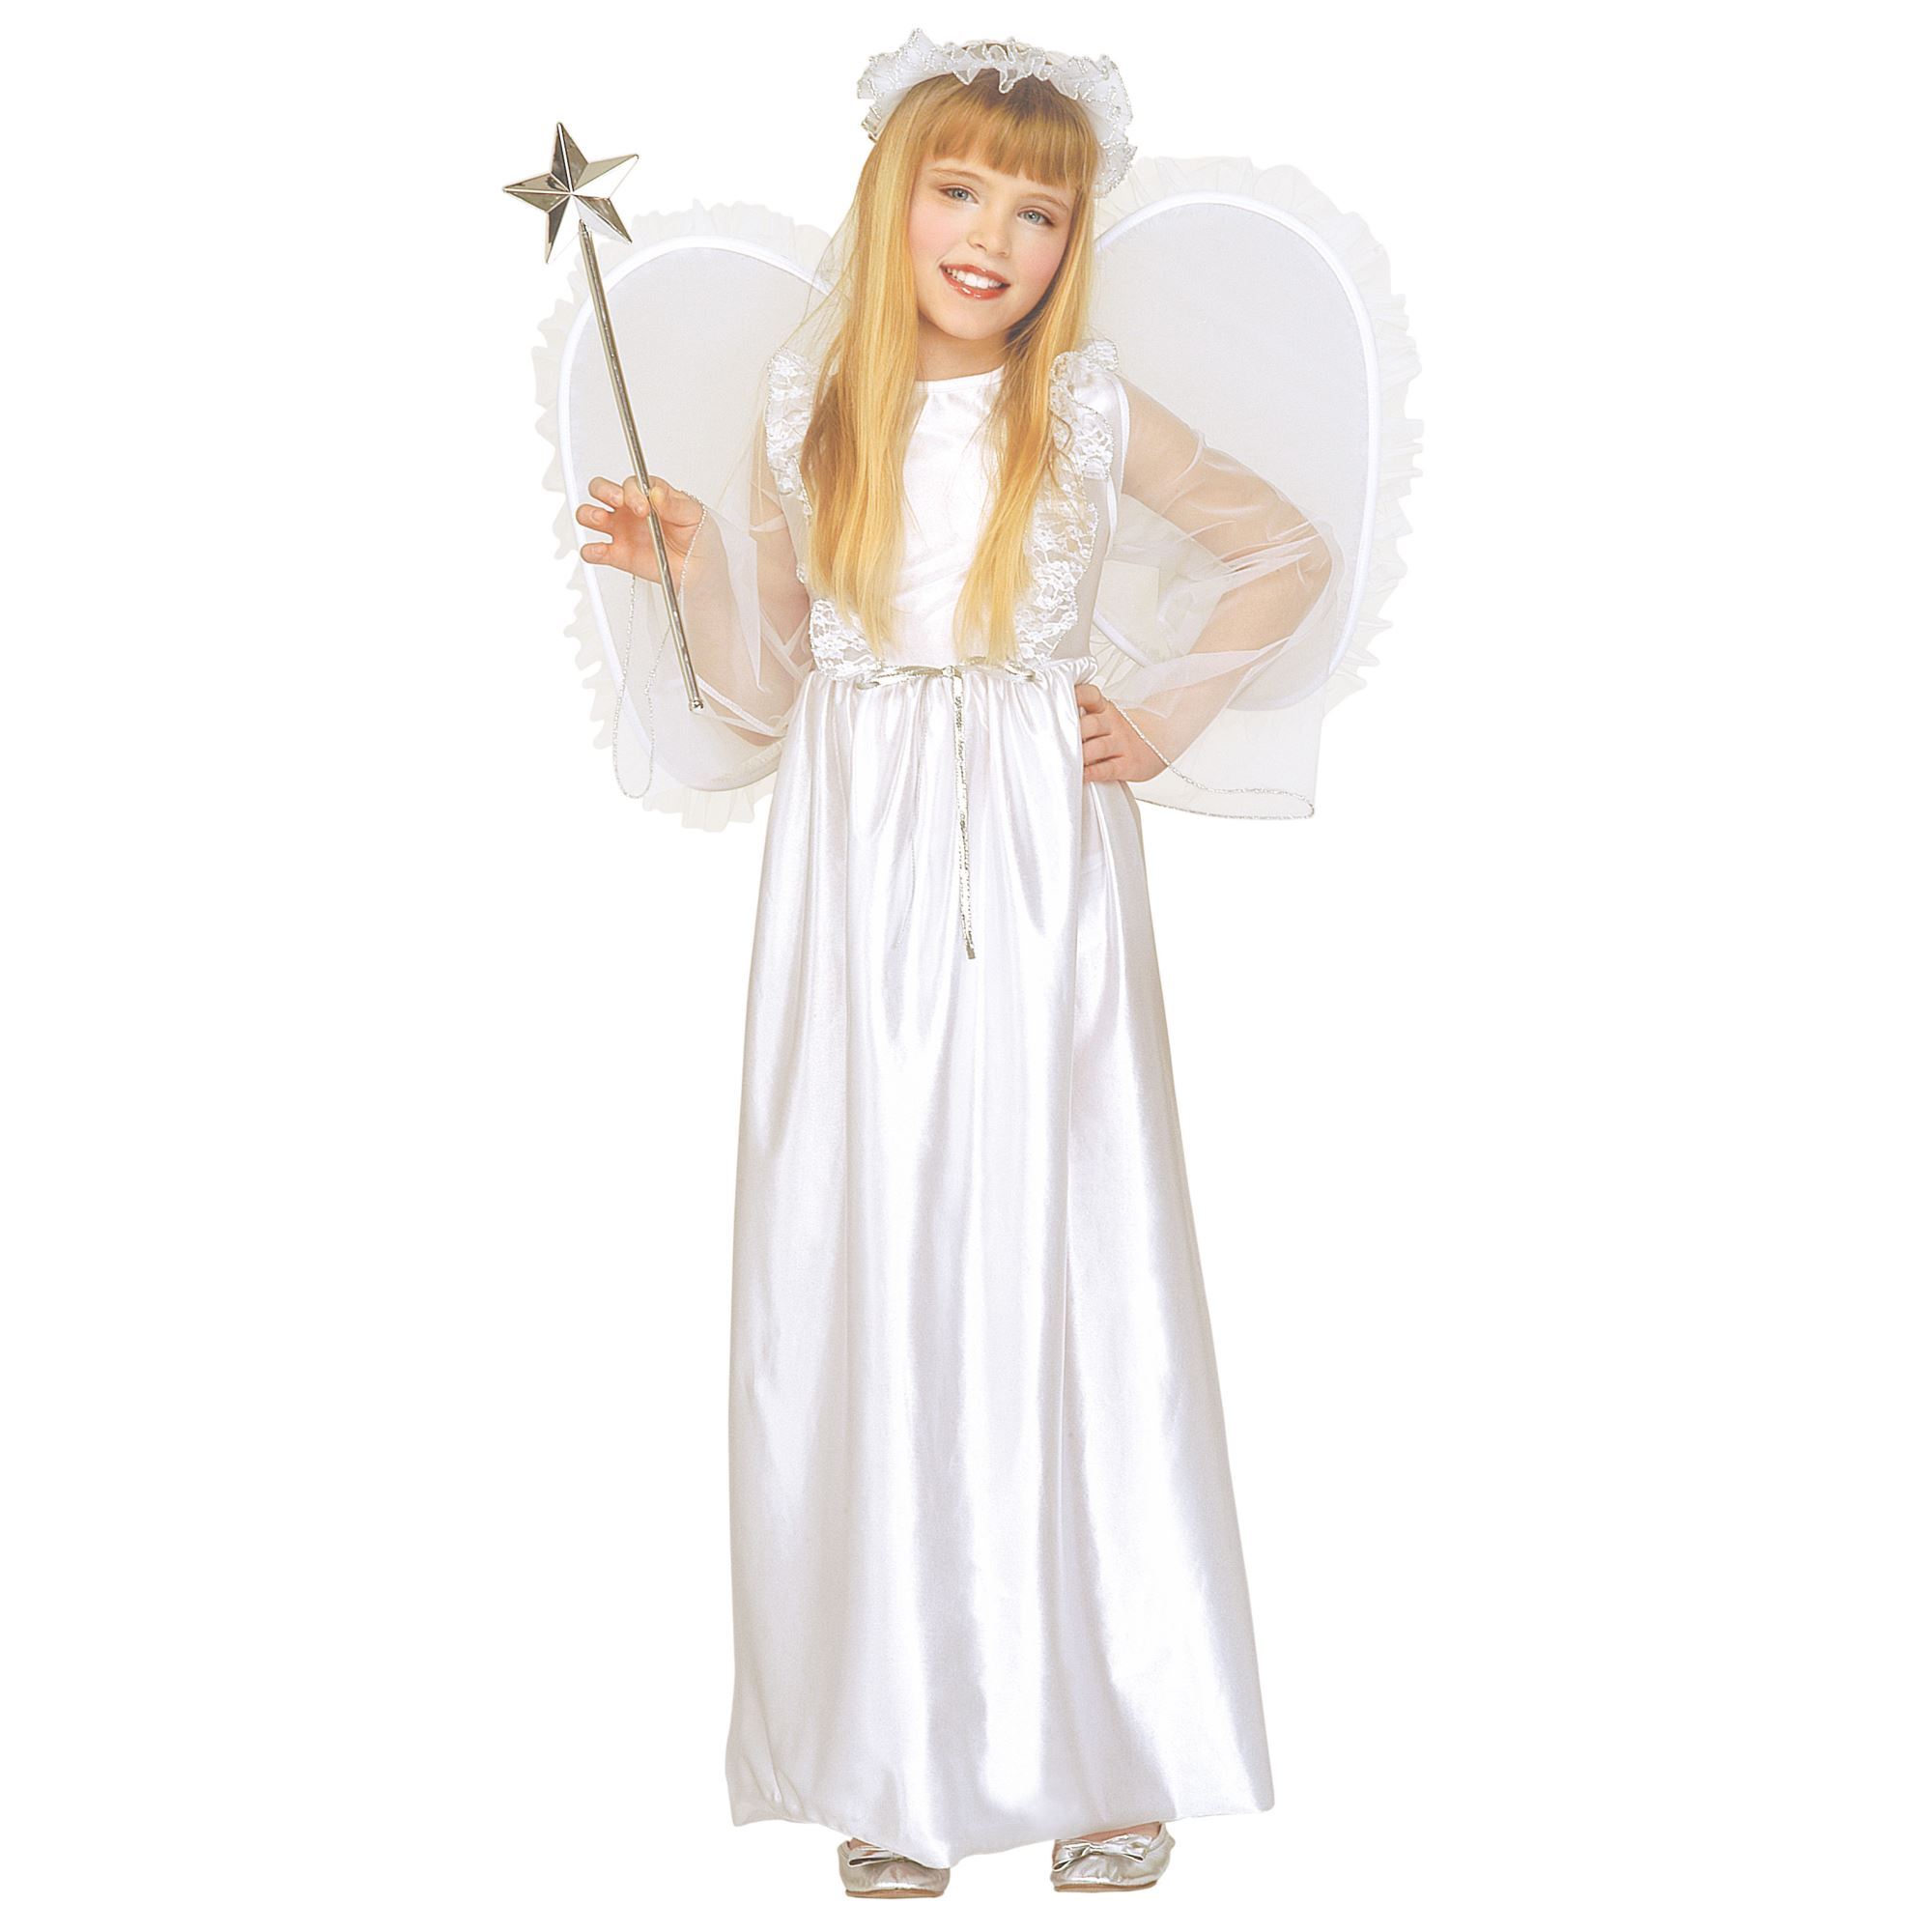 Fluisteren Doodskaak klein Engel meisje kostuum Voordelig en ruime keus